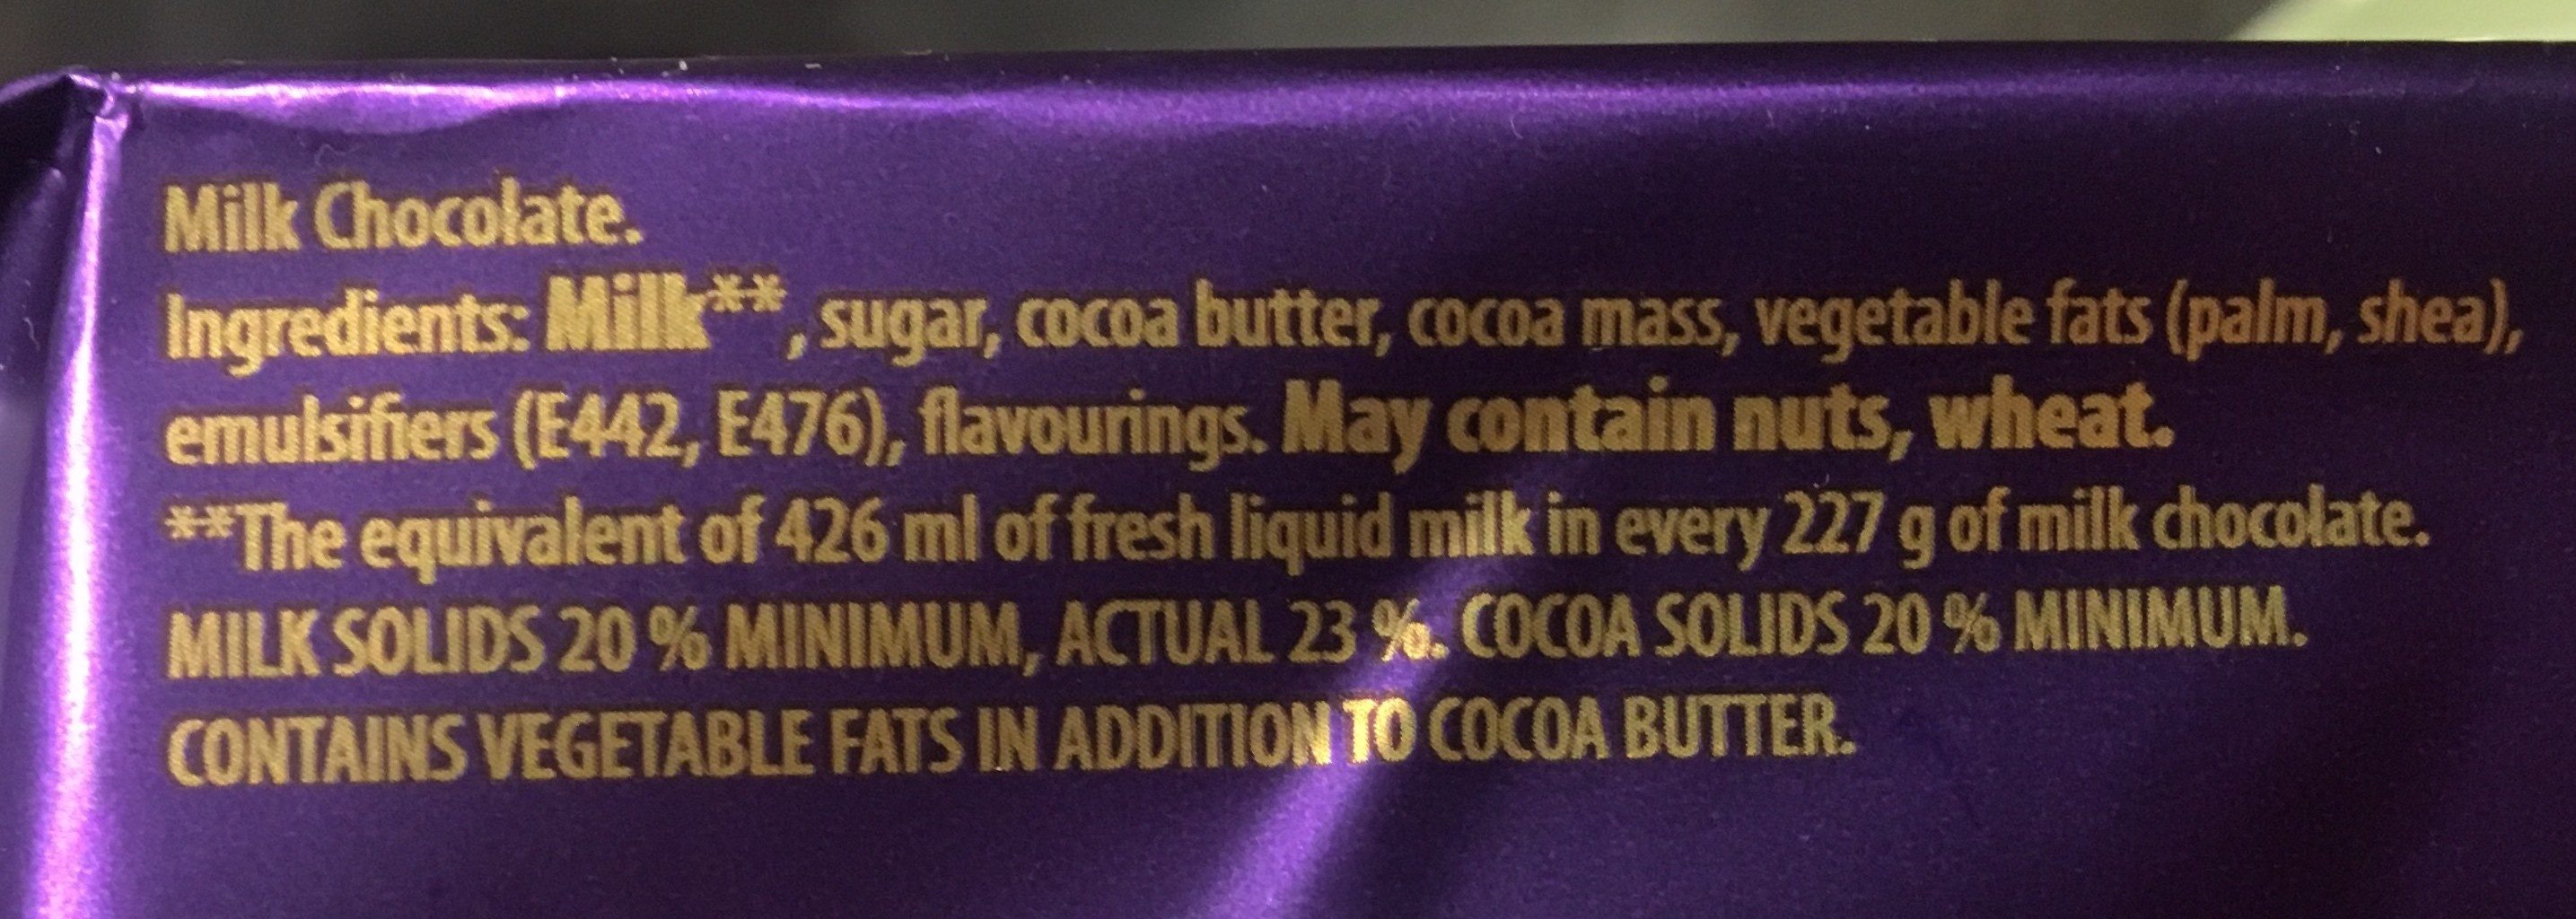 Dairy milk chocolate bar - Ingredients